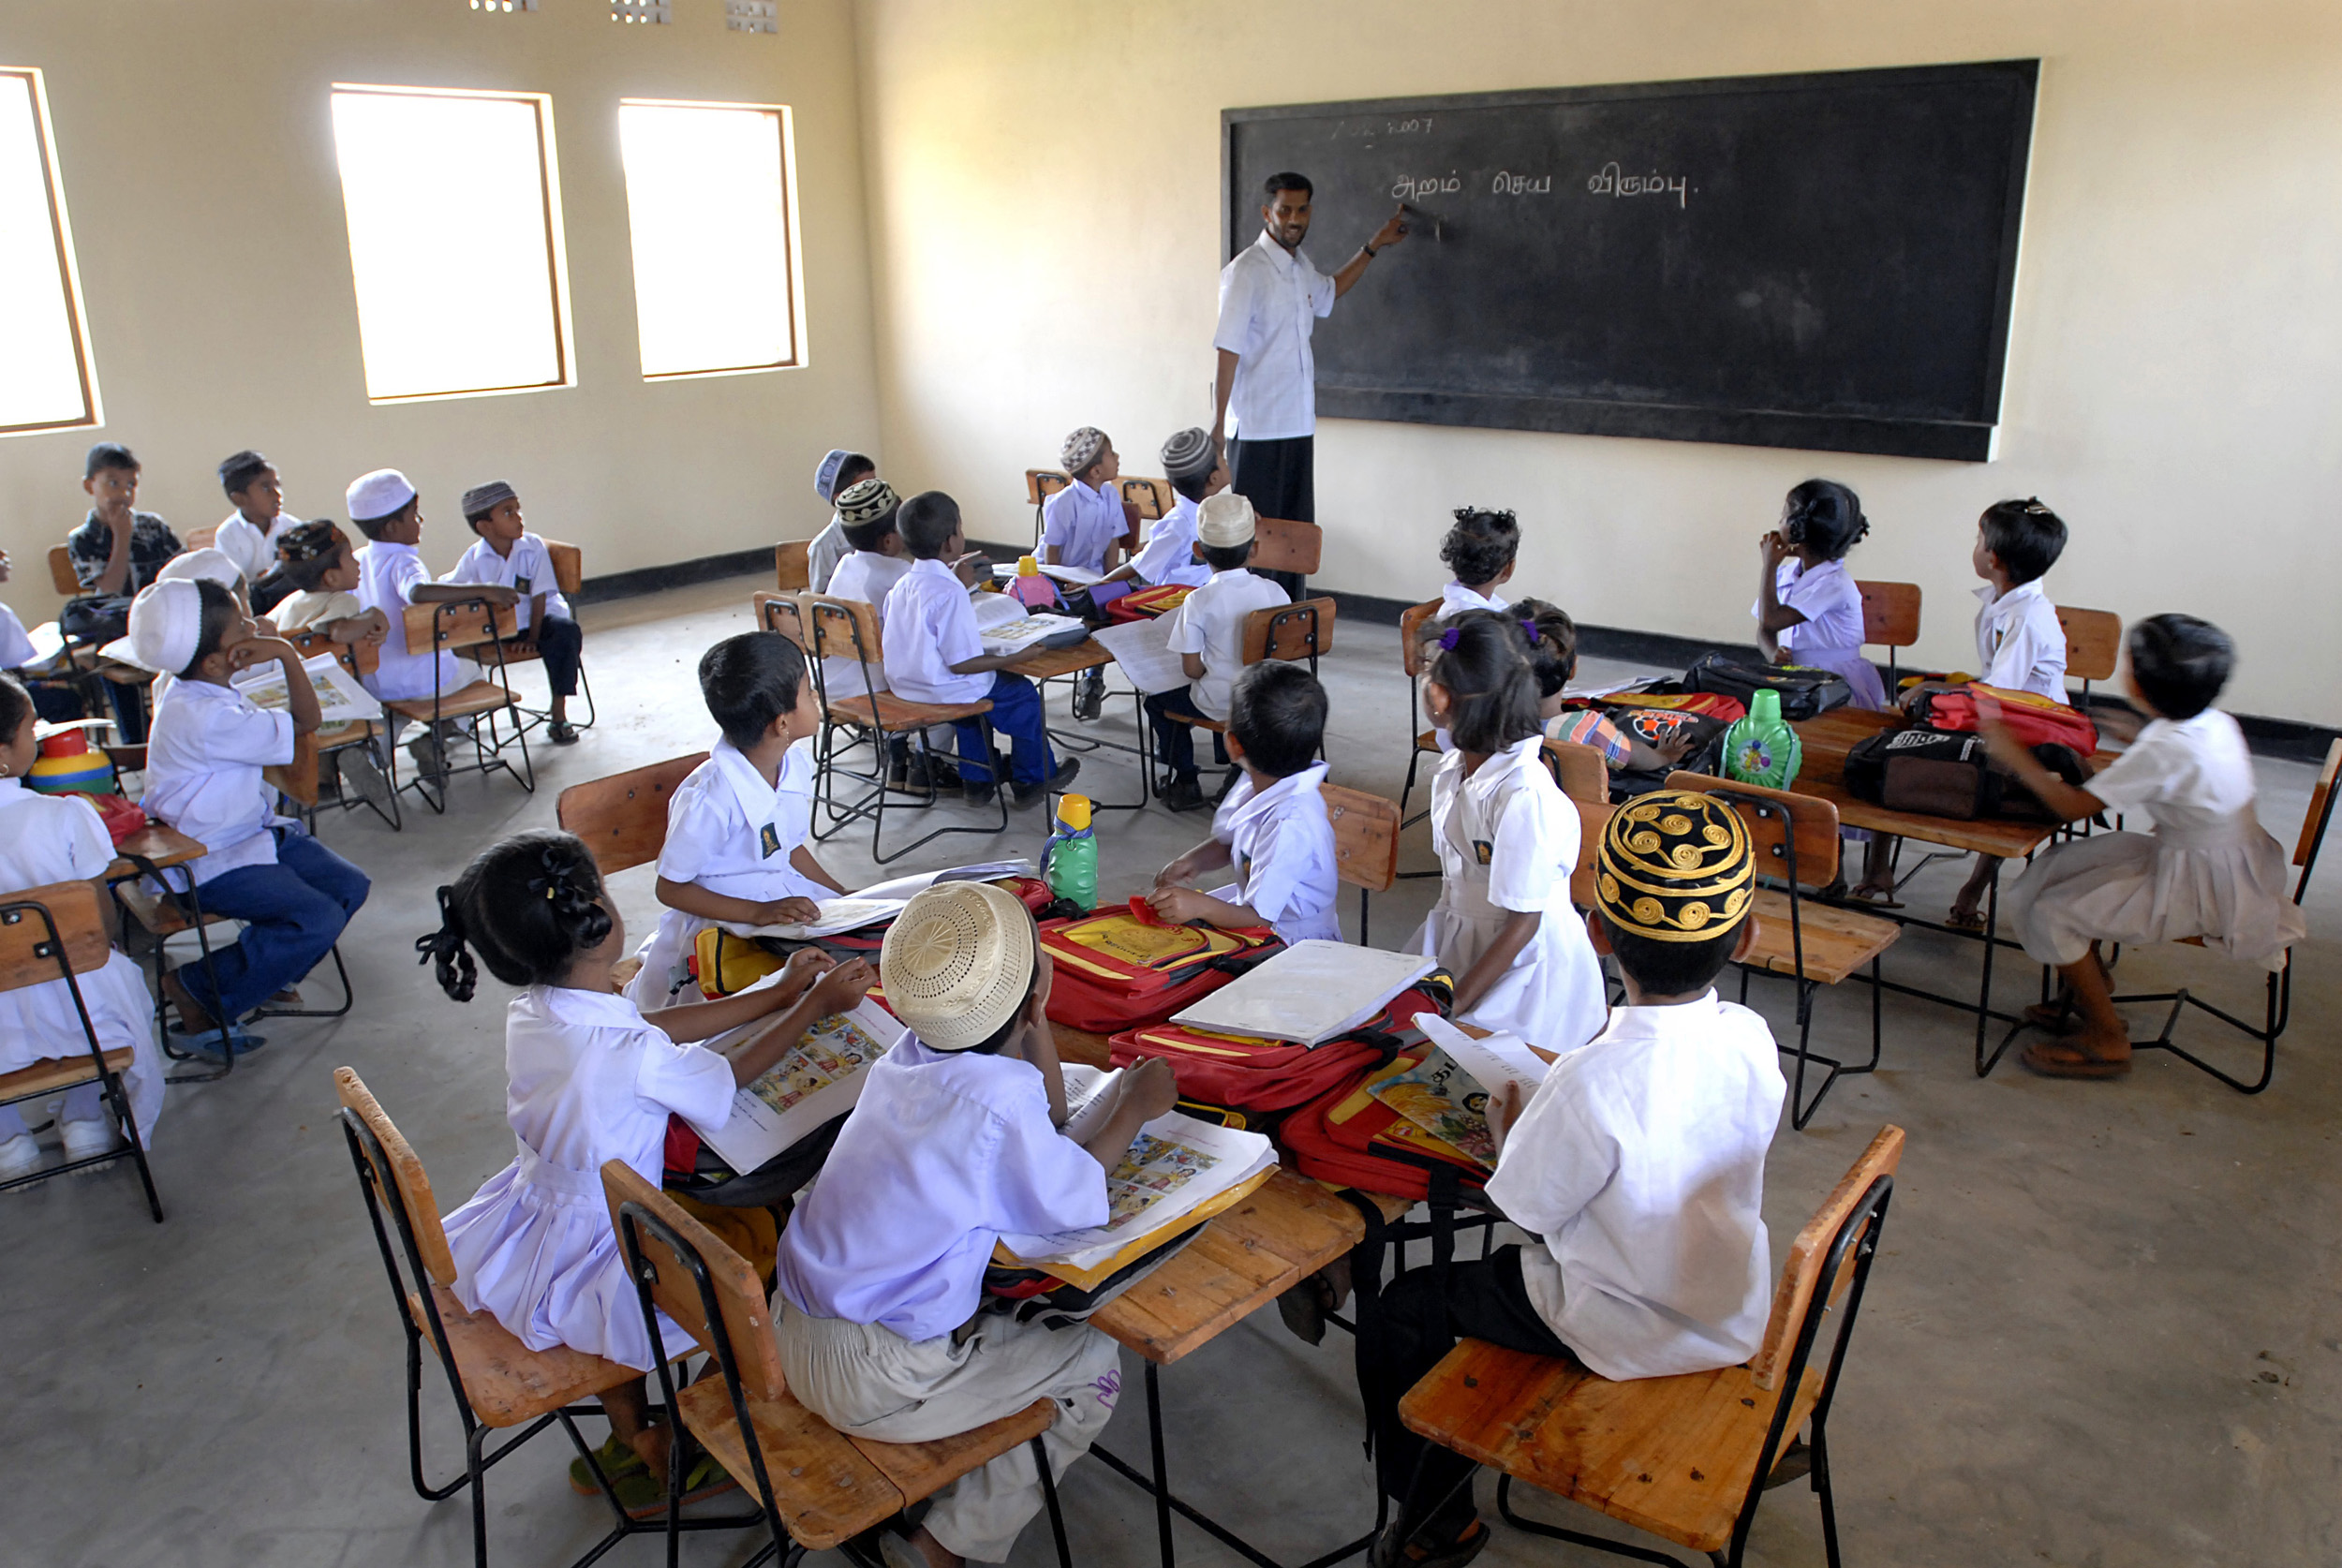 Over 25% of school children in SL study in hunger: Study reveals